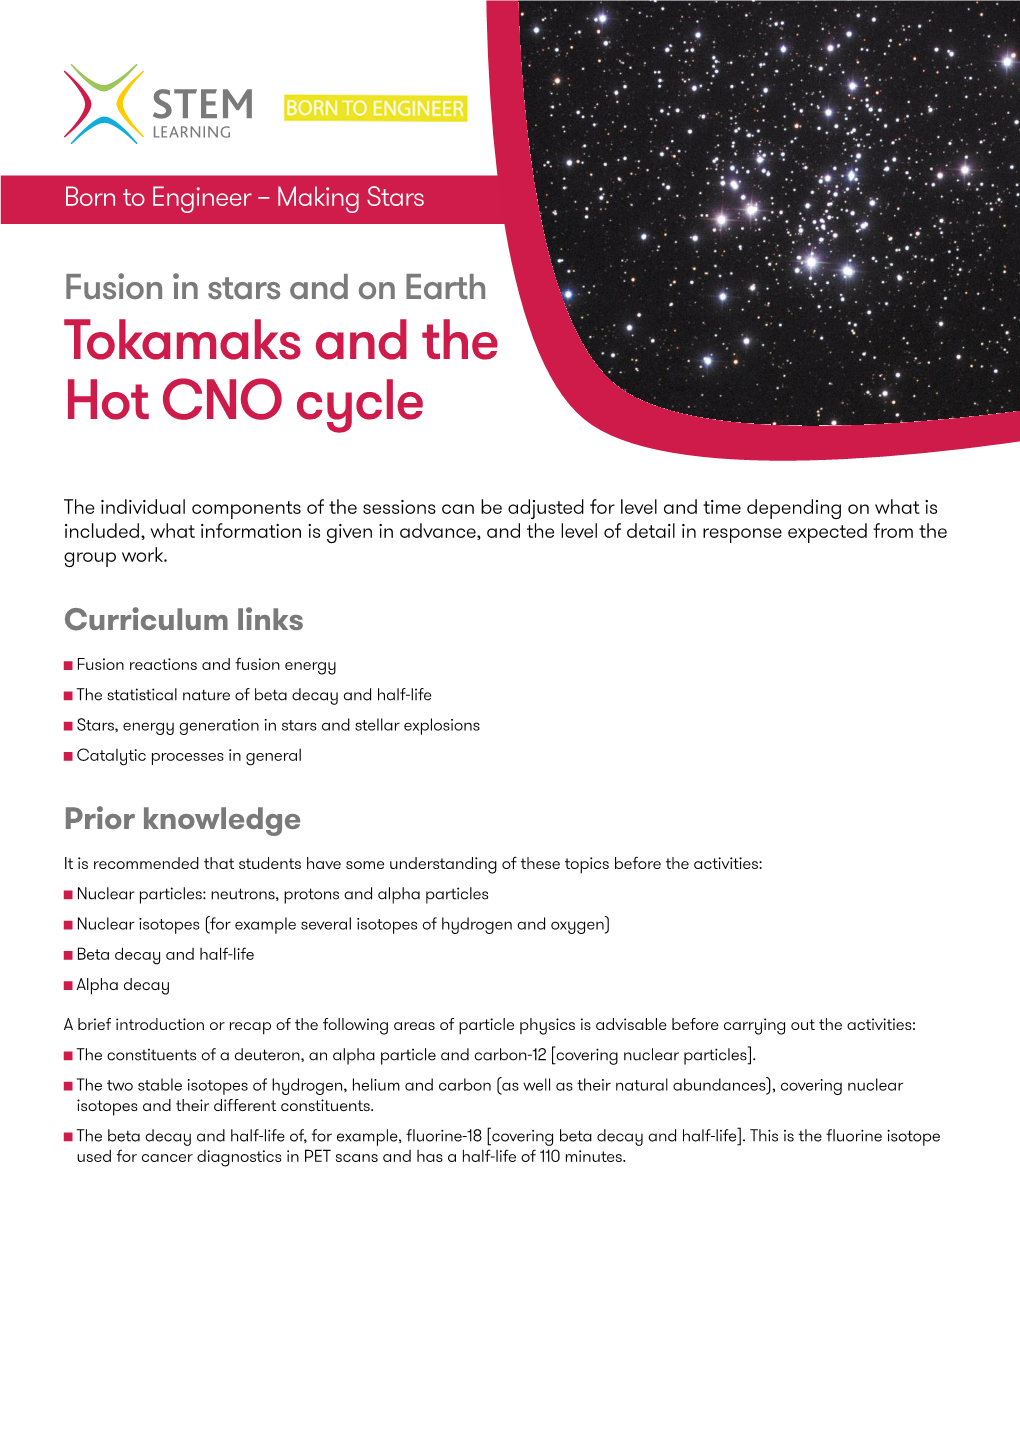 Tokamaks and the Hot CNO Cycle